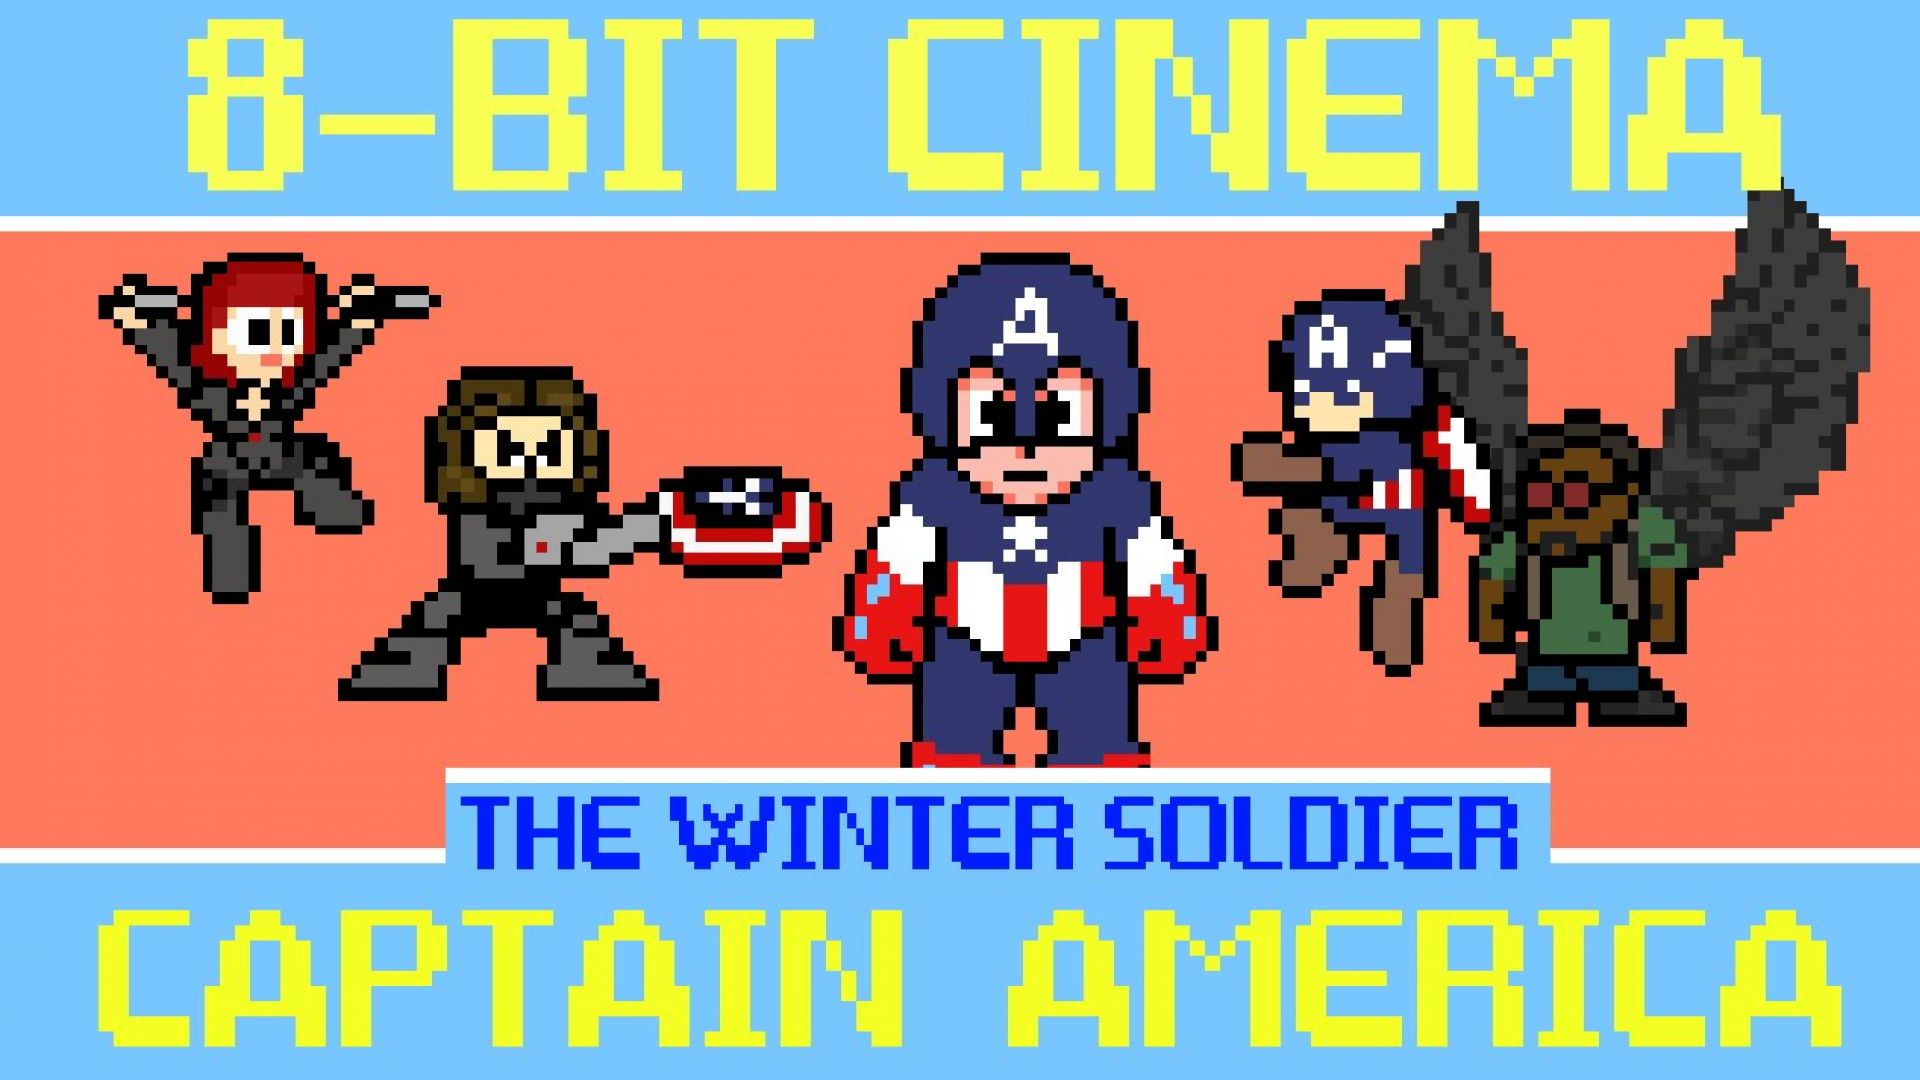 8-Bit Cinema reimagines Captain America: The Winter Soldier